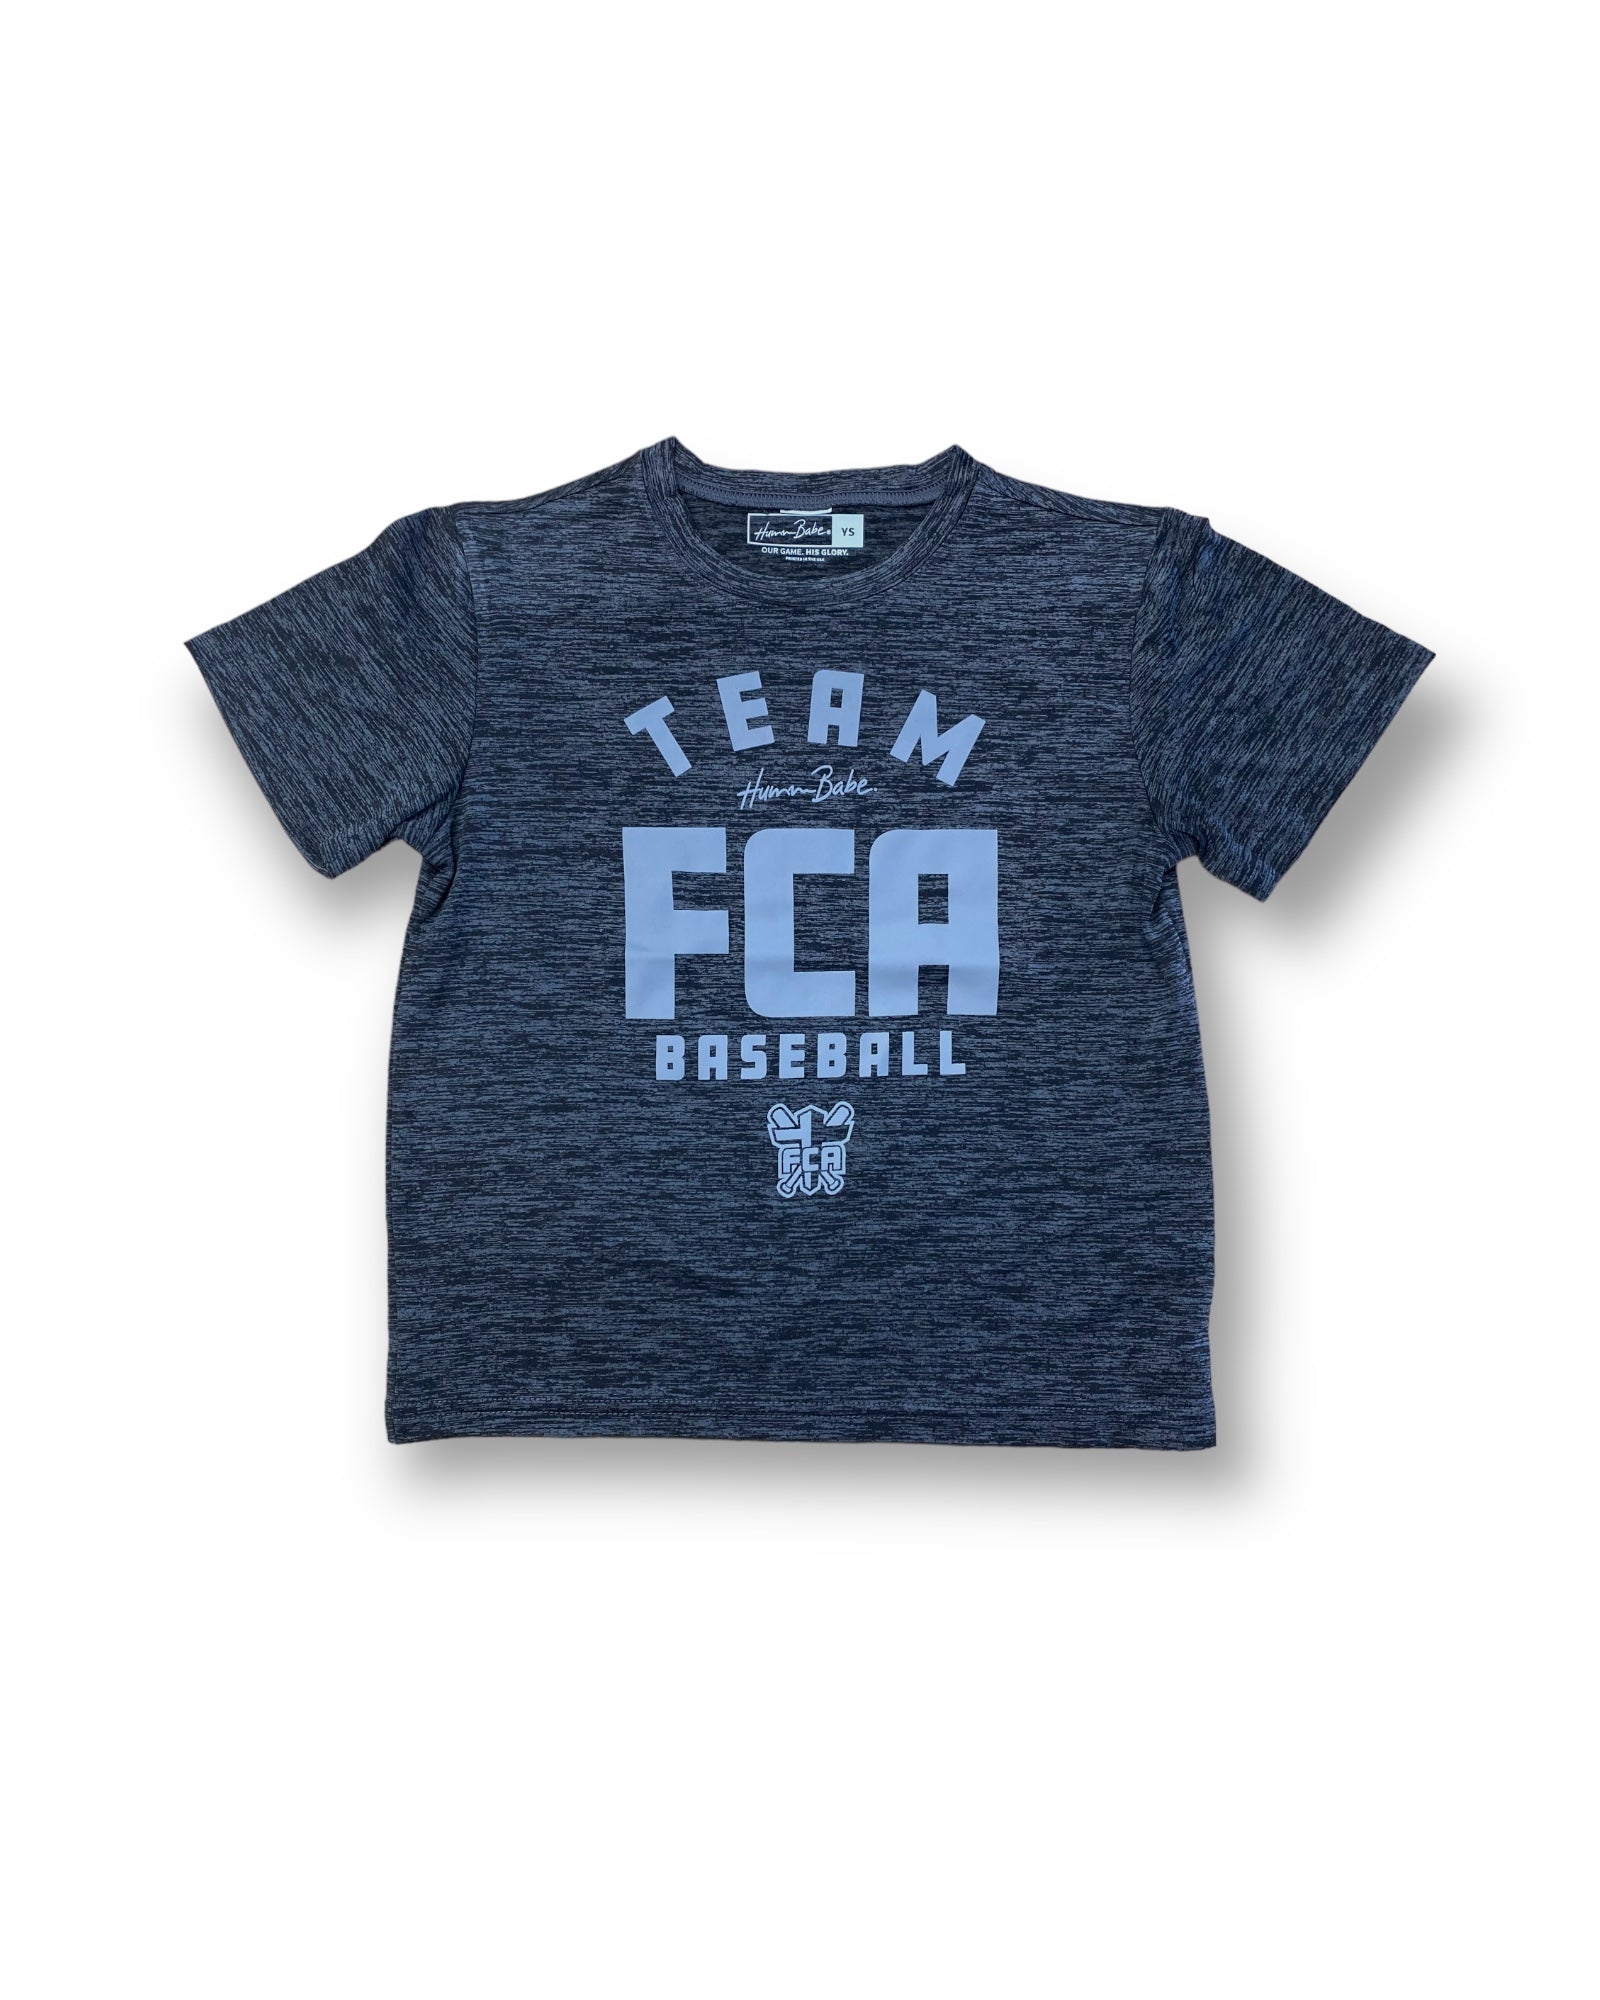 Team FCA T-Shirt